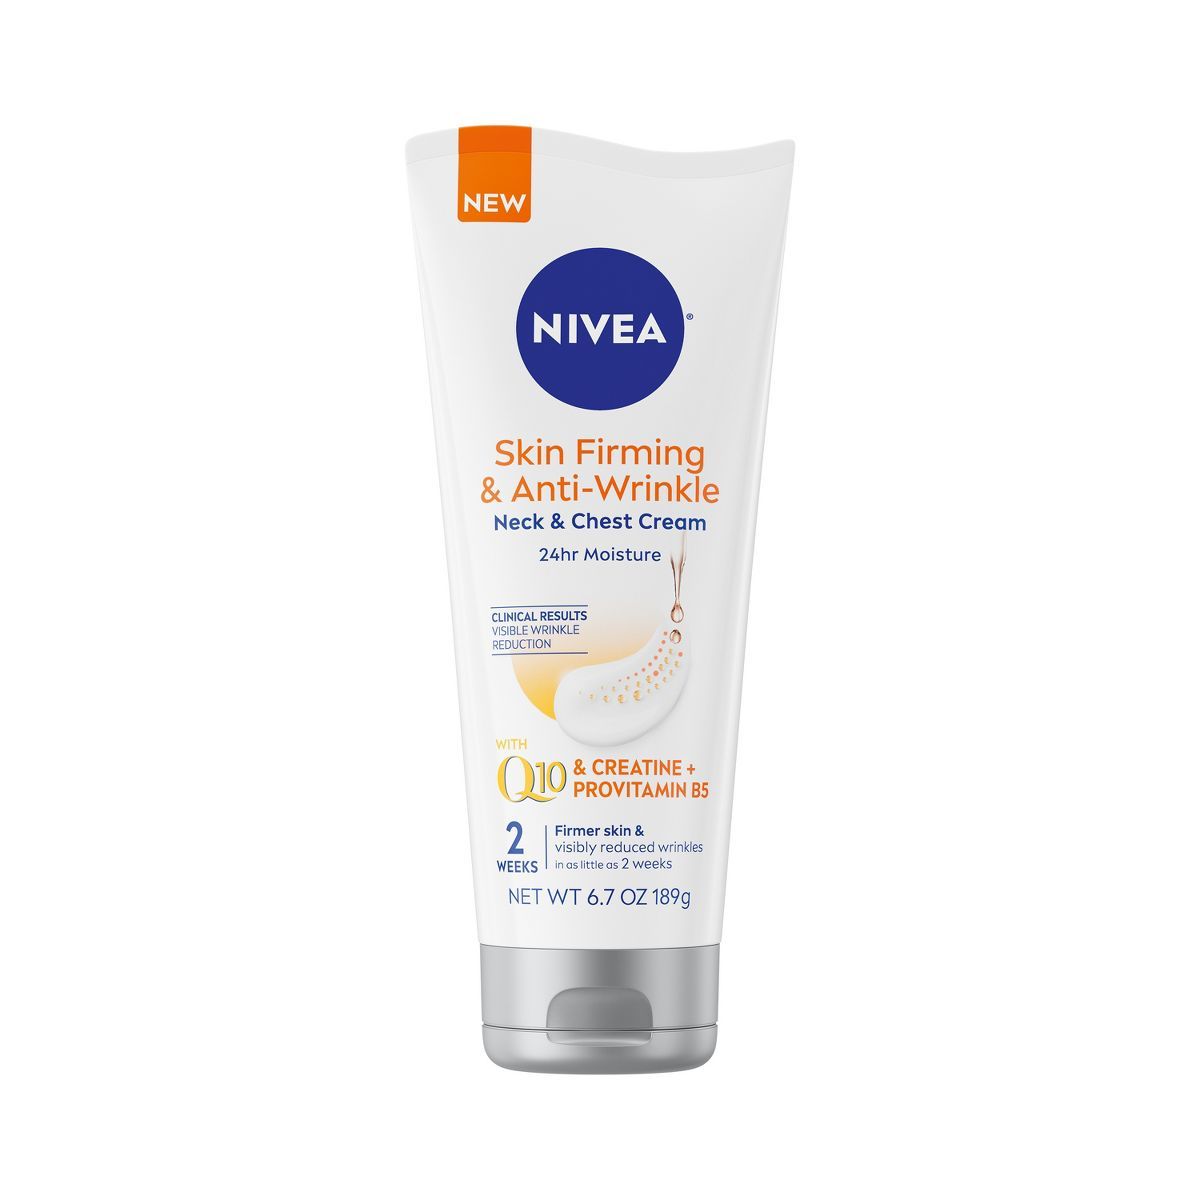 NIVEA Skin Firming & Anti-Wrinkle Neck & Chest Cream - 6.7oz | Target